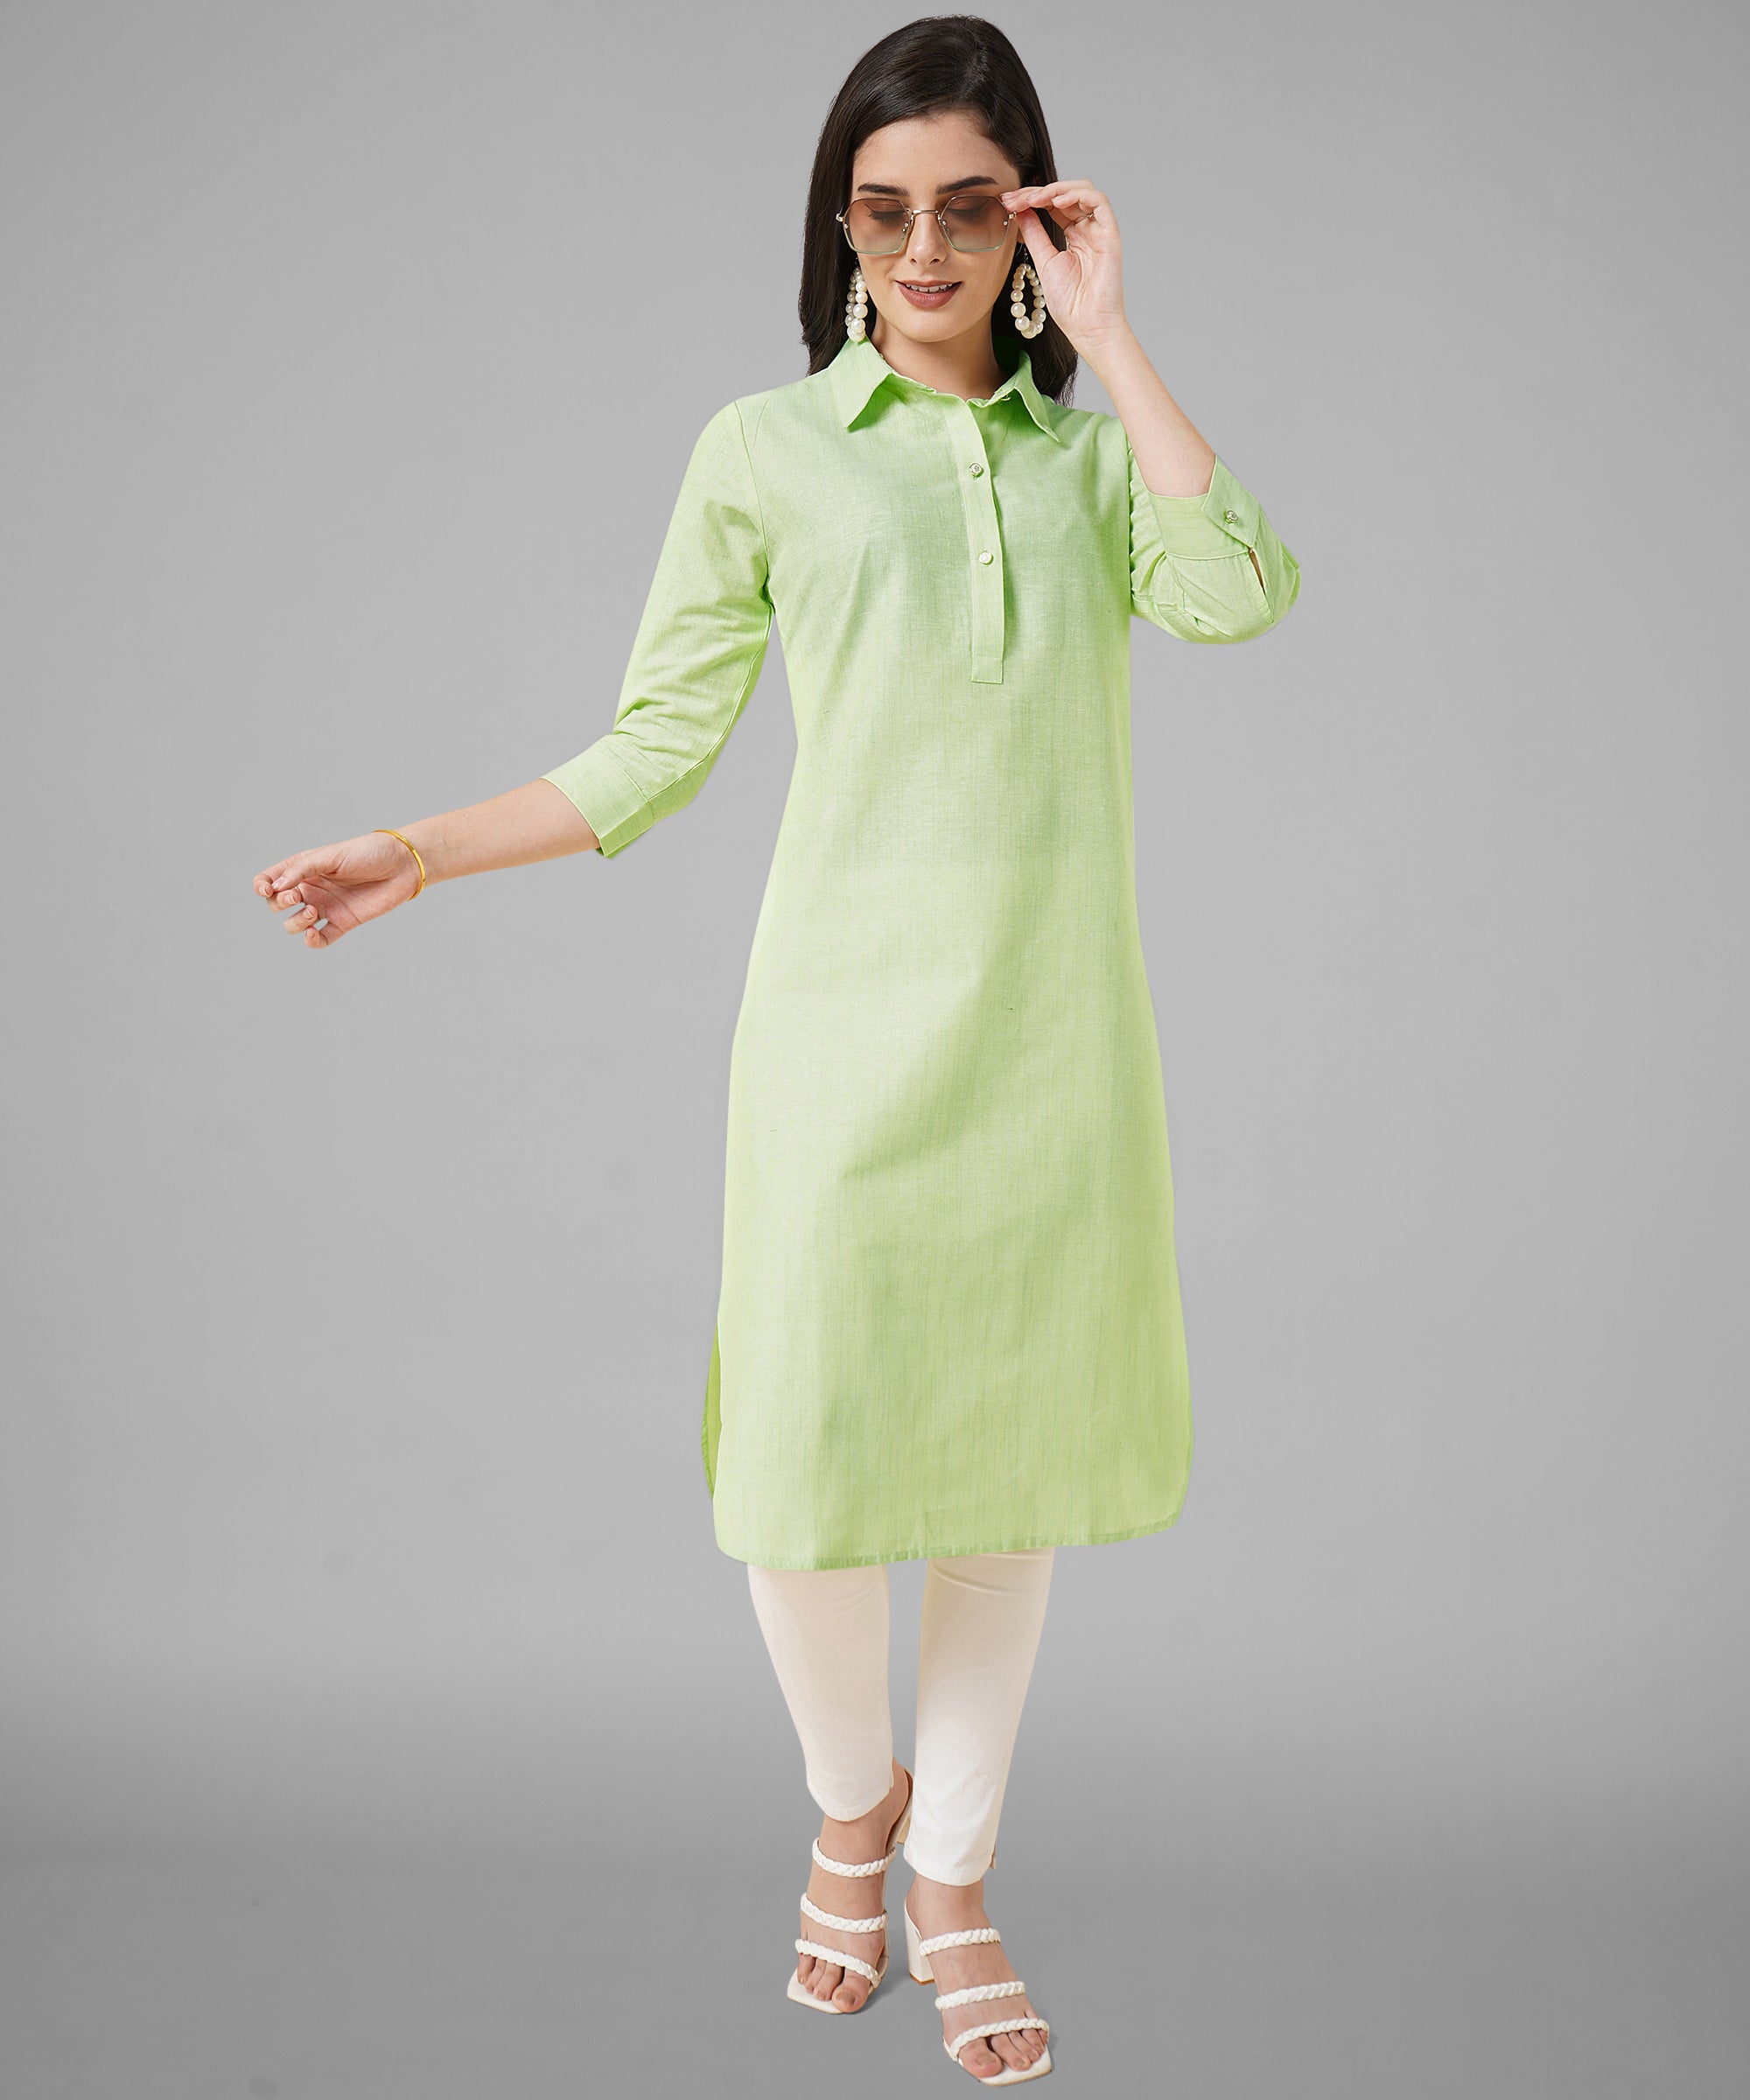 Lime Green White Print Lace Around Button Regular Kurti - L at Rs 650 |  Printed Kurti | ID: 2852060524048